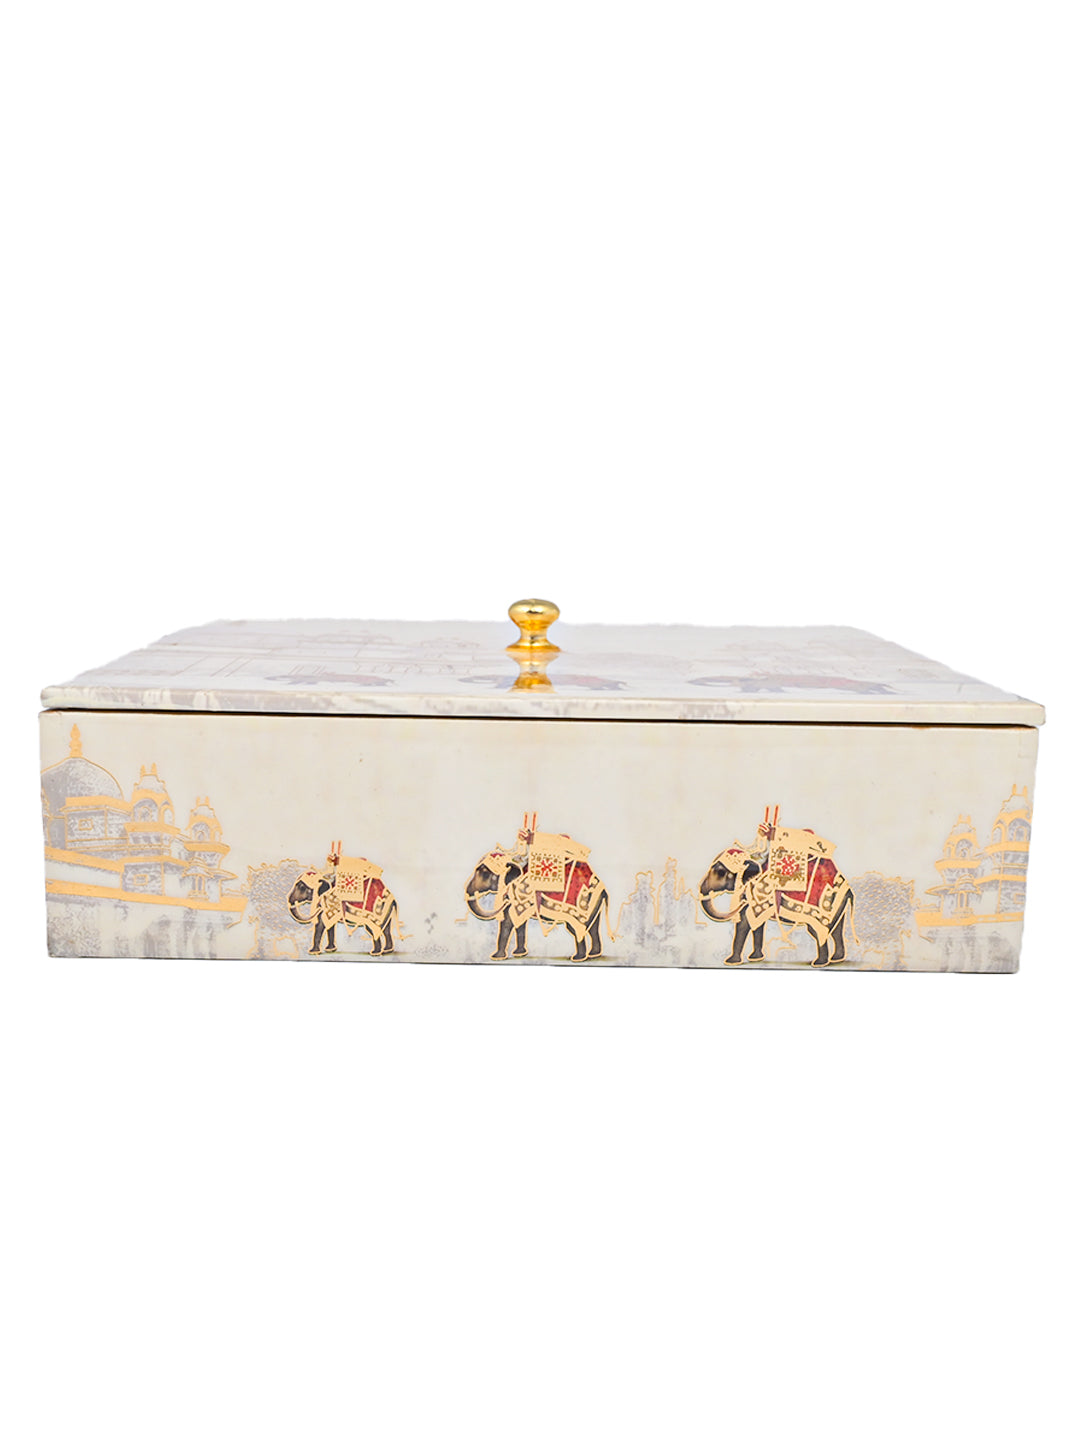 Elephant Mahal Square Box With Acrylic 6*6